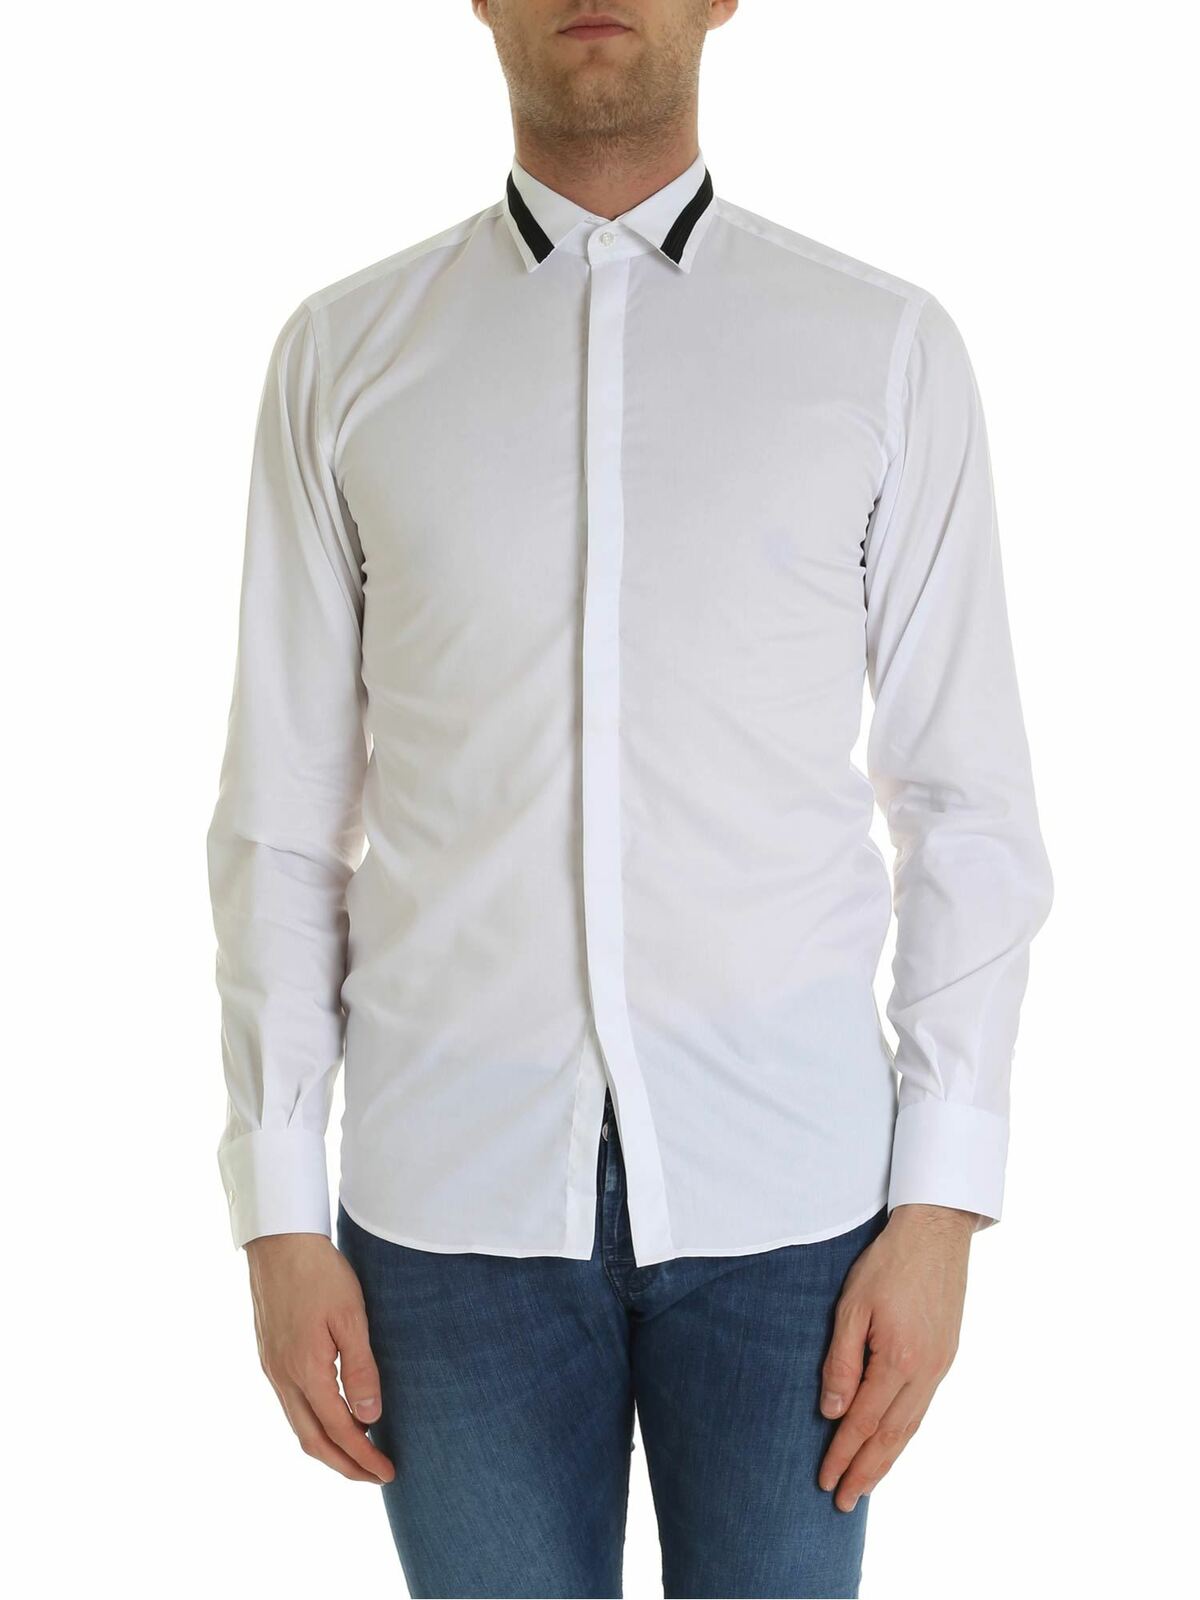 Karl Lagerfeld White Shirt With Black Insert